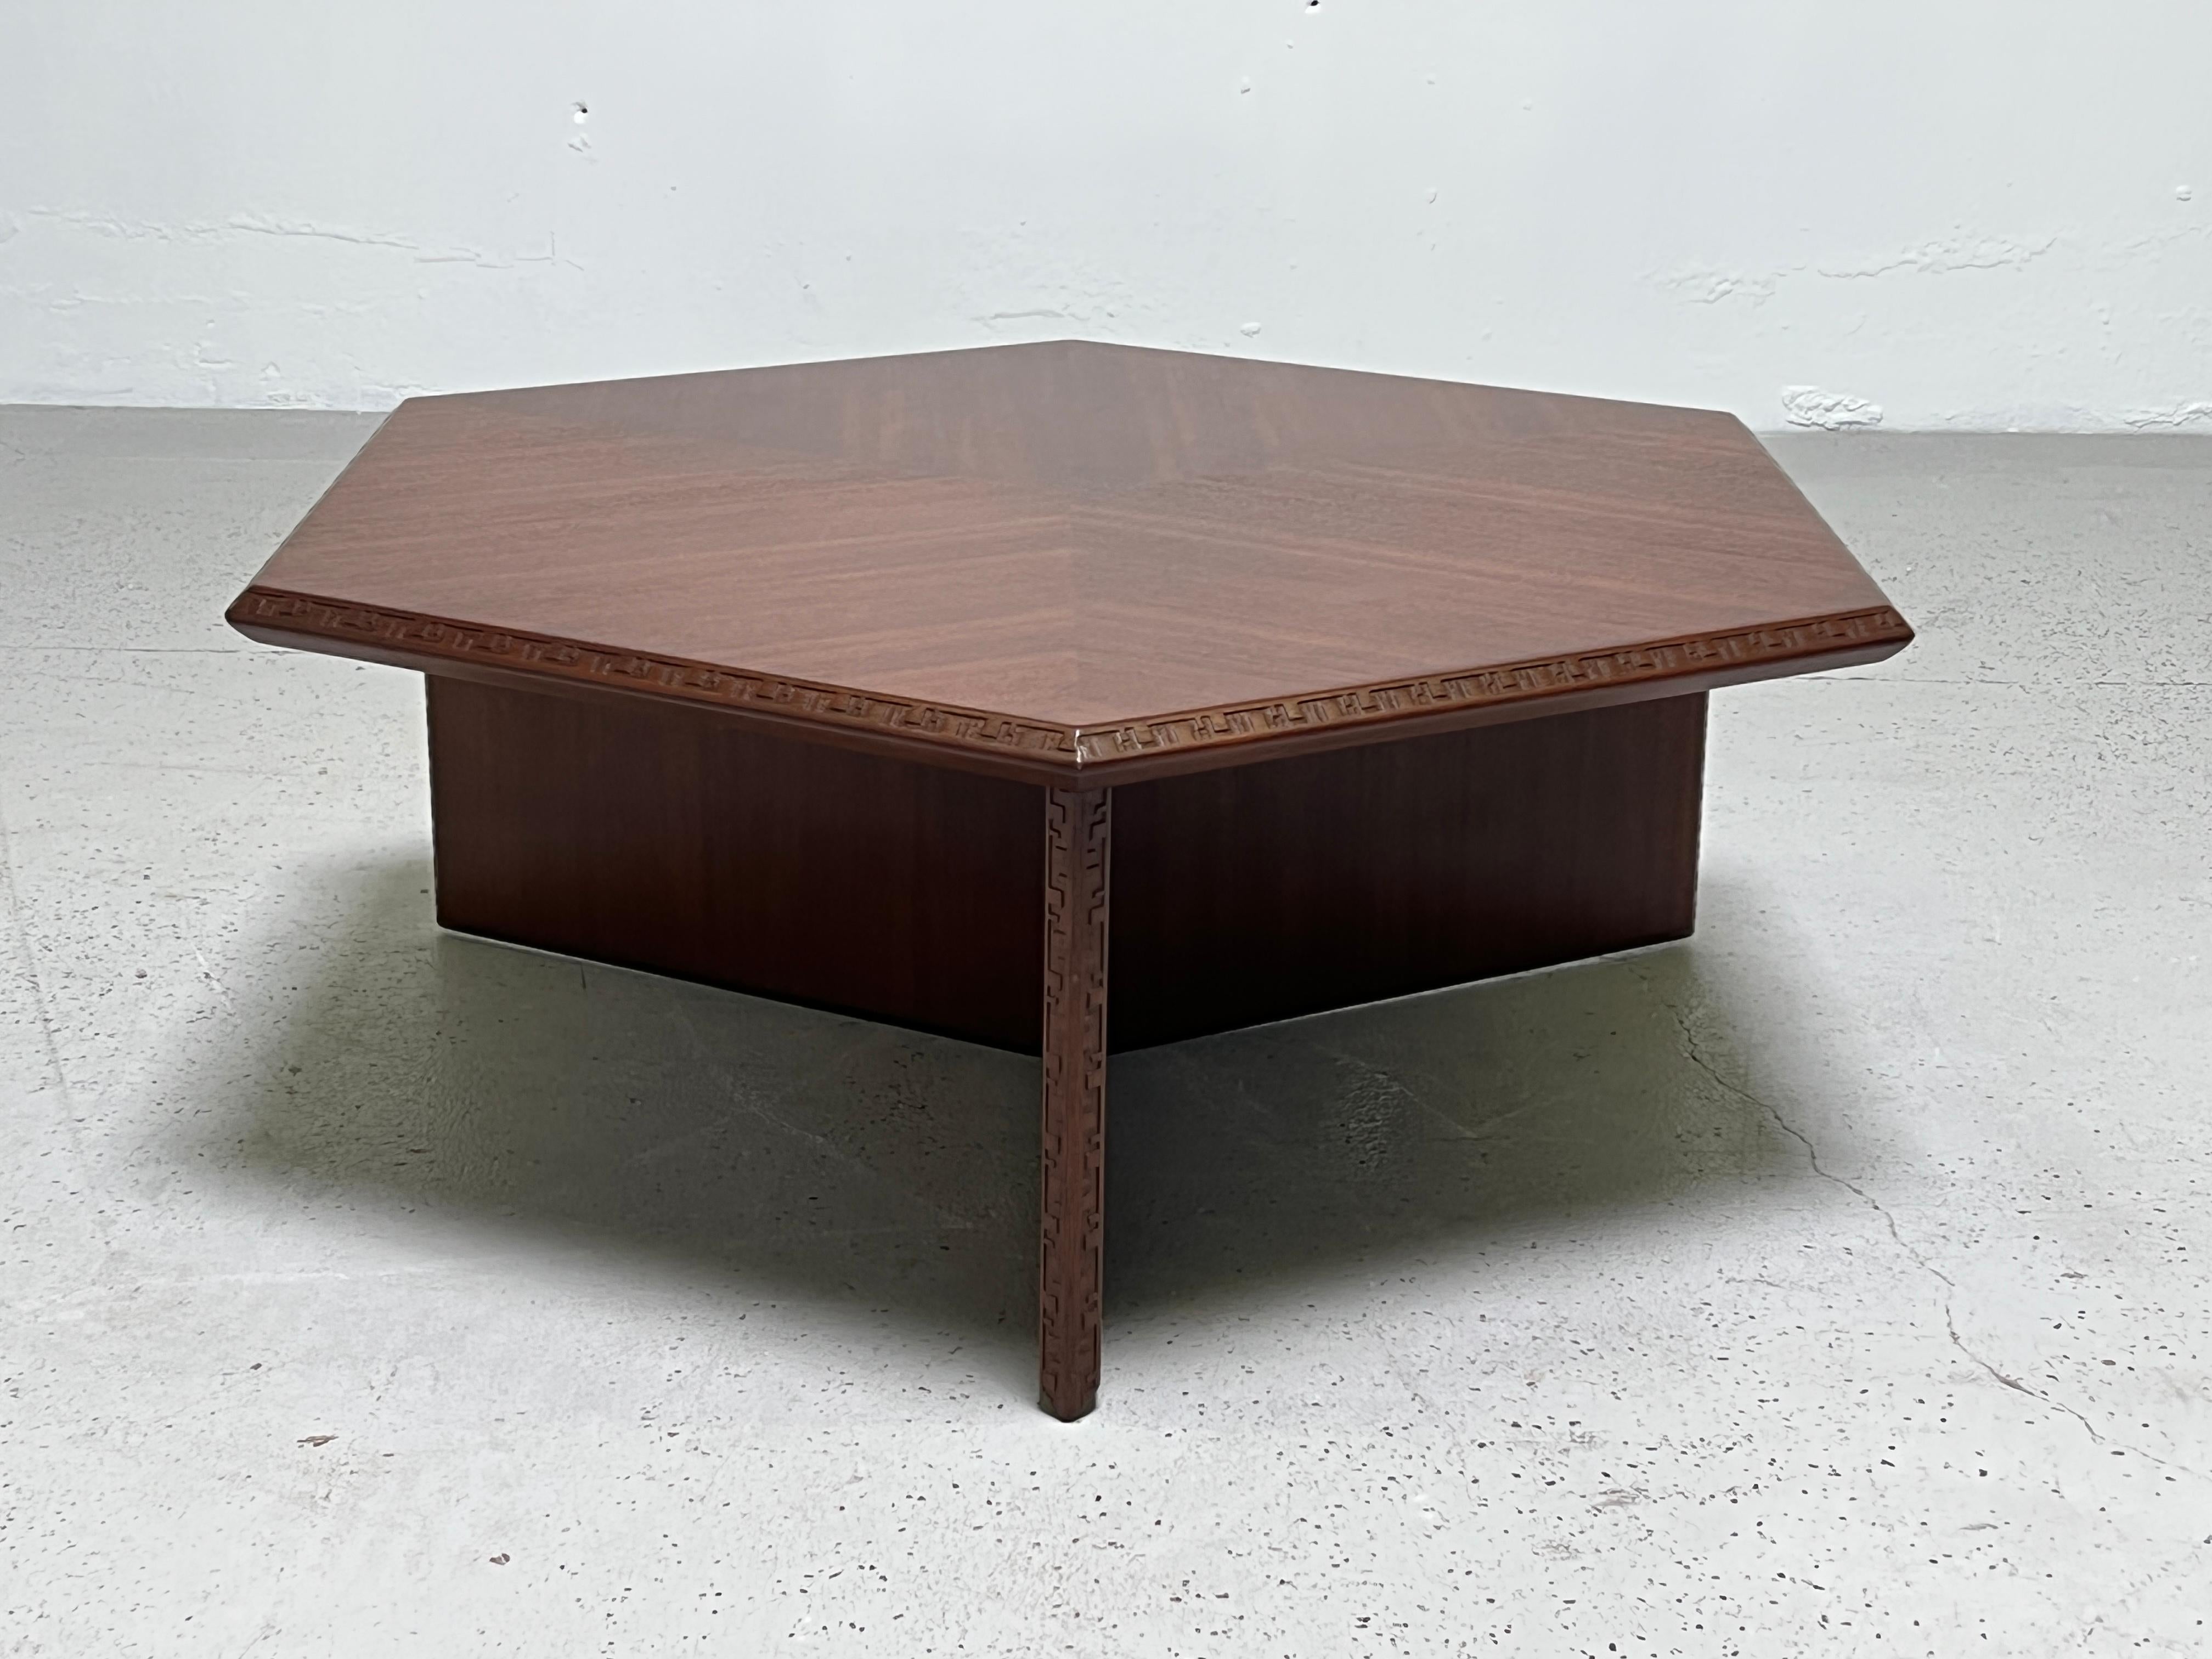 Hexagonal Taliesin Coffee Table by Frank Lloyd Wright for Henredon For Sale 3